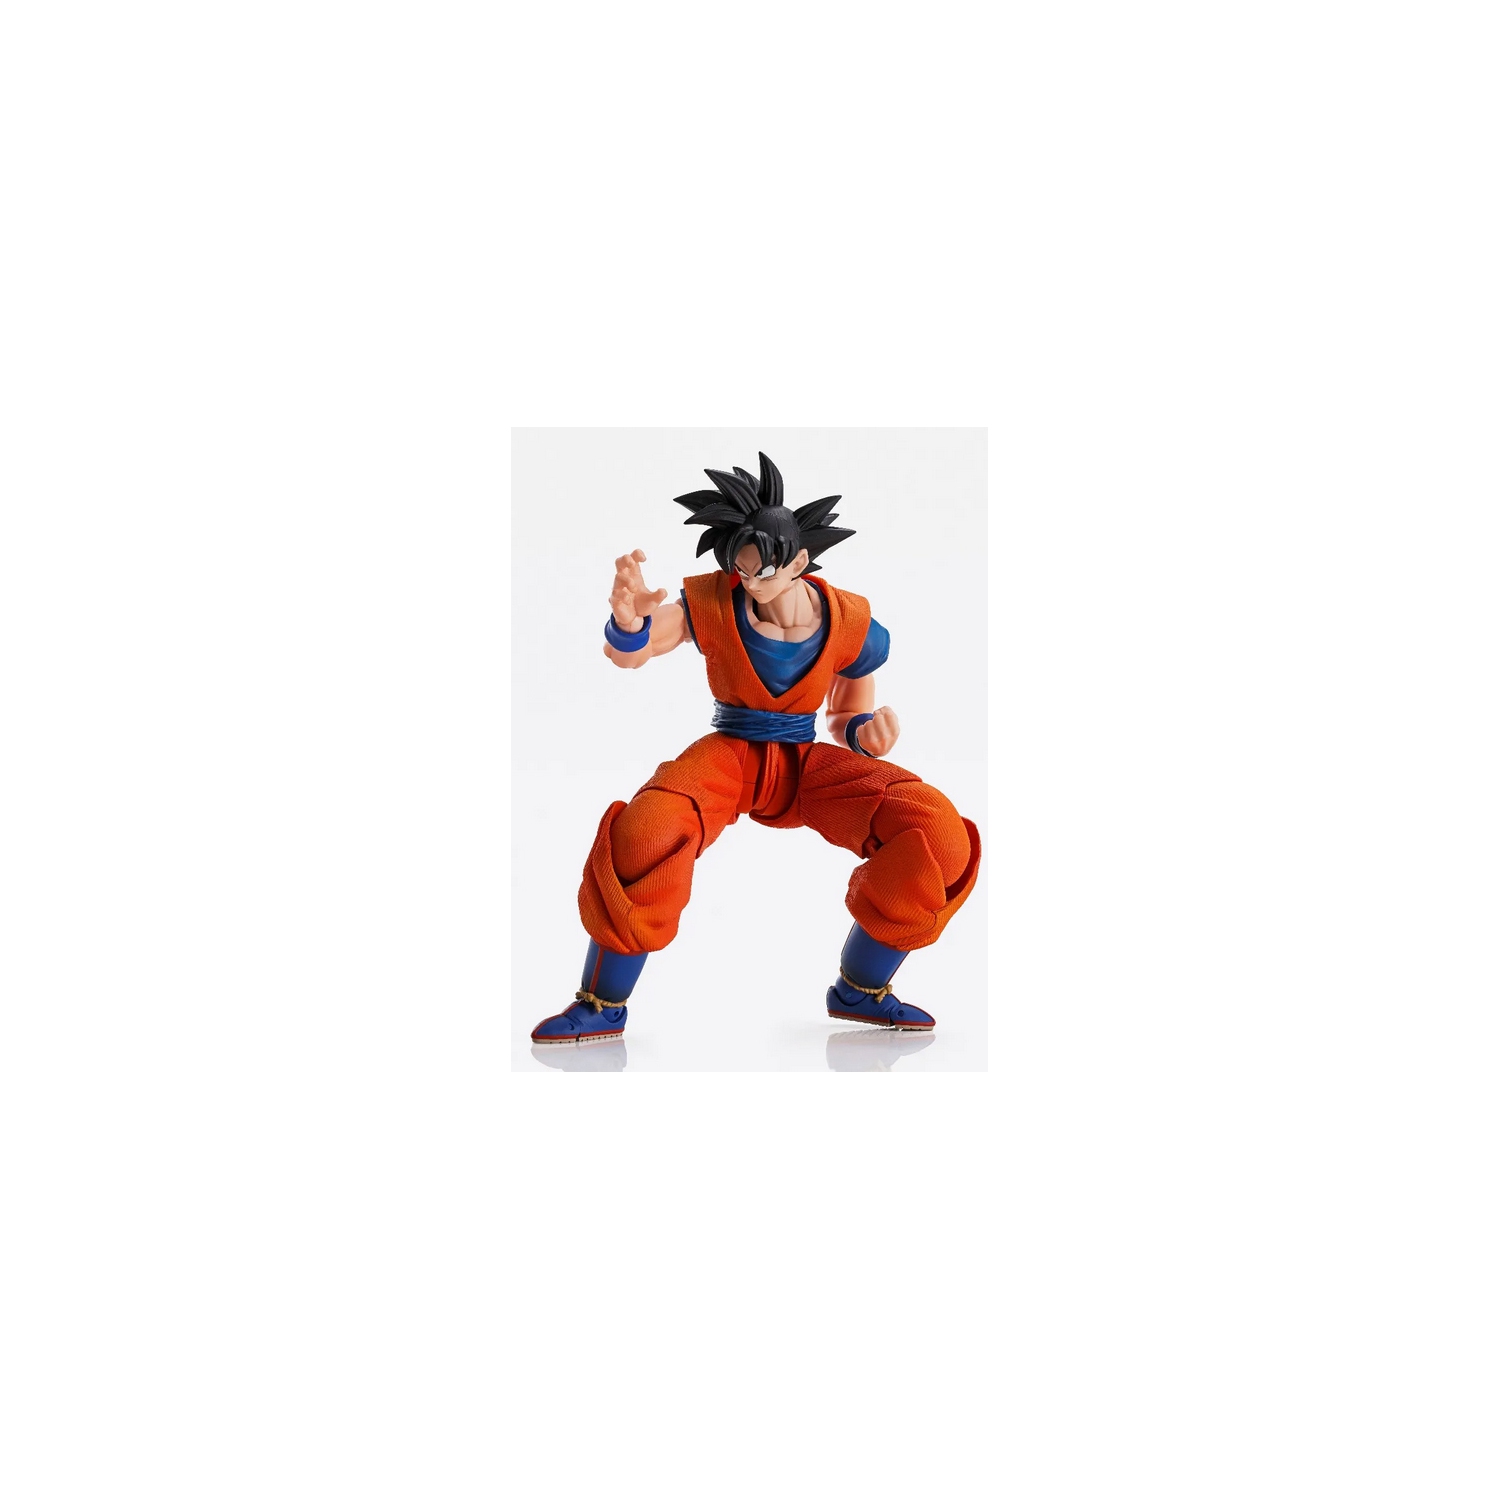 Dragonball Z 8 Inch Action Figure Imagination Works - Son Goku